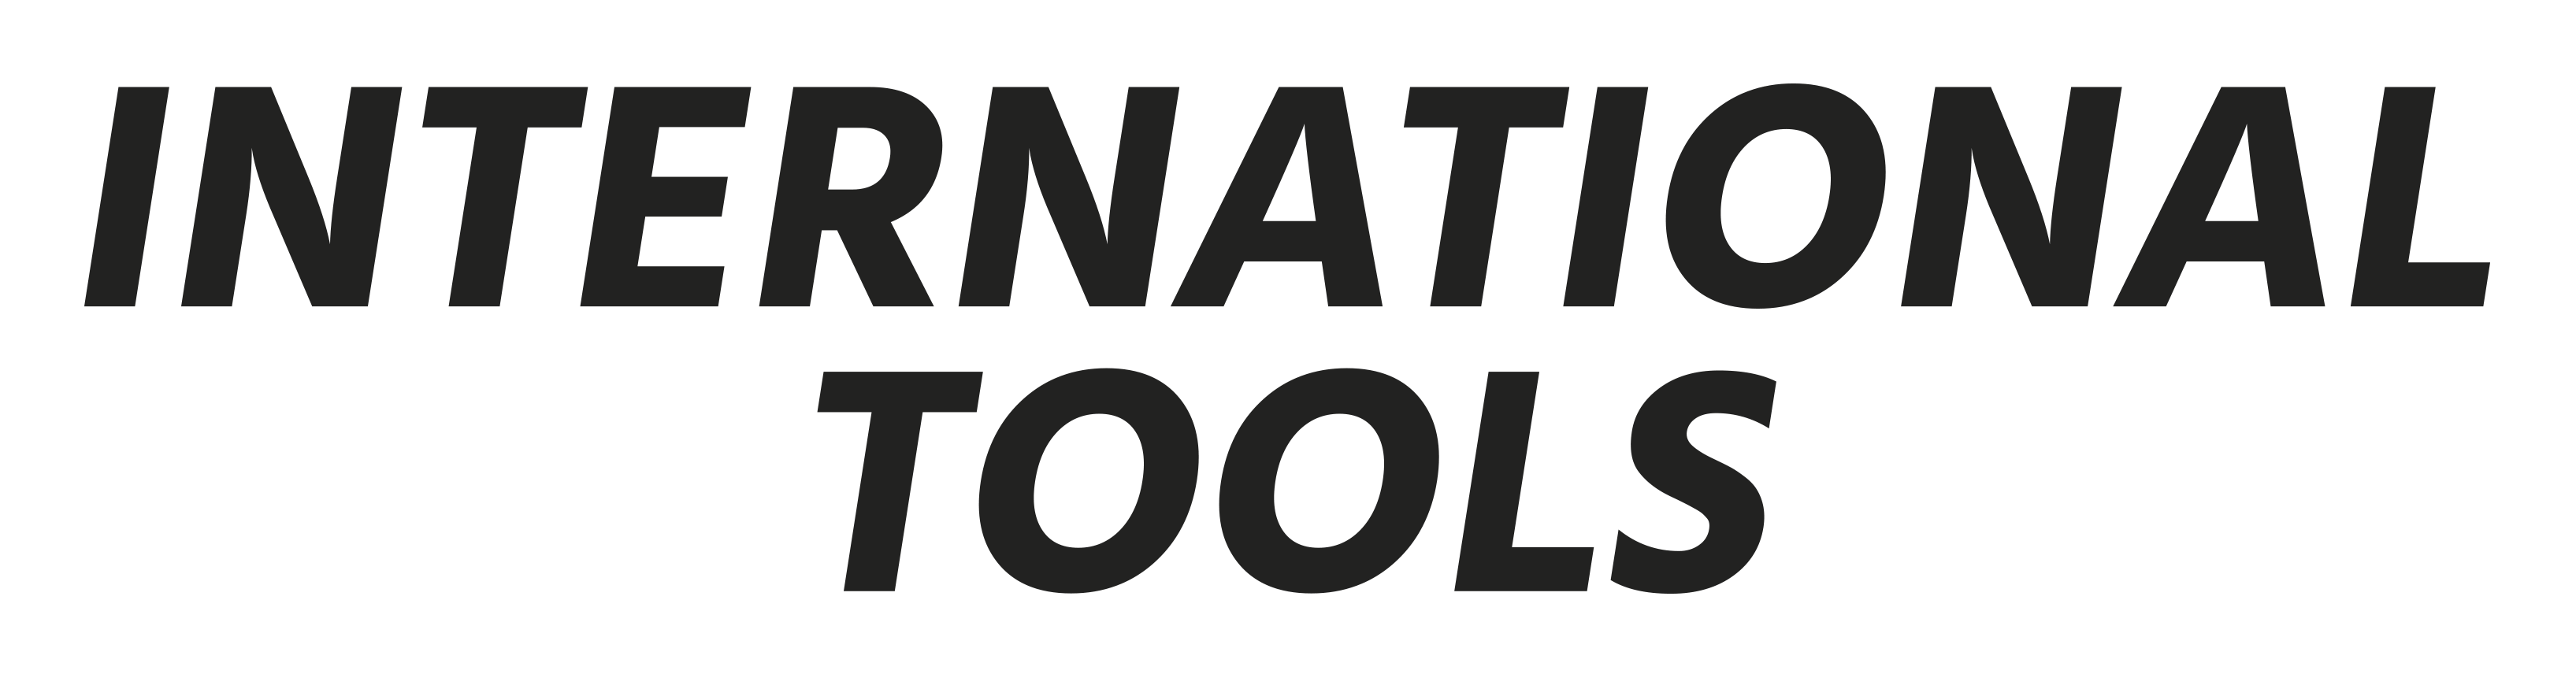 Logo International Tools